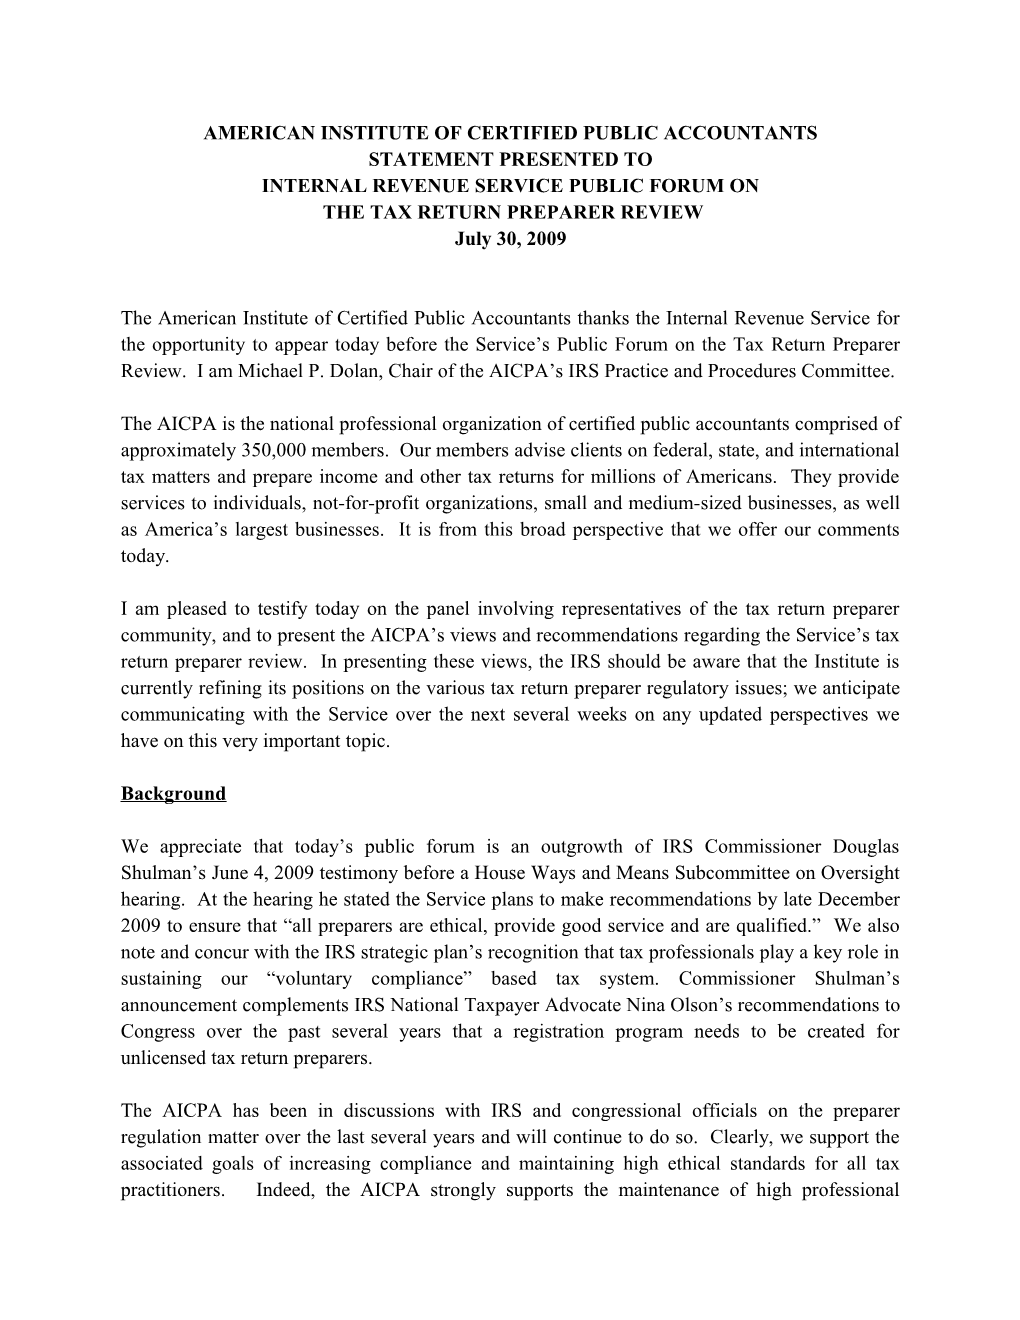 Statement Presented to Internal Revenue Service Public Forum on the Tax Return Preparer